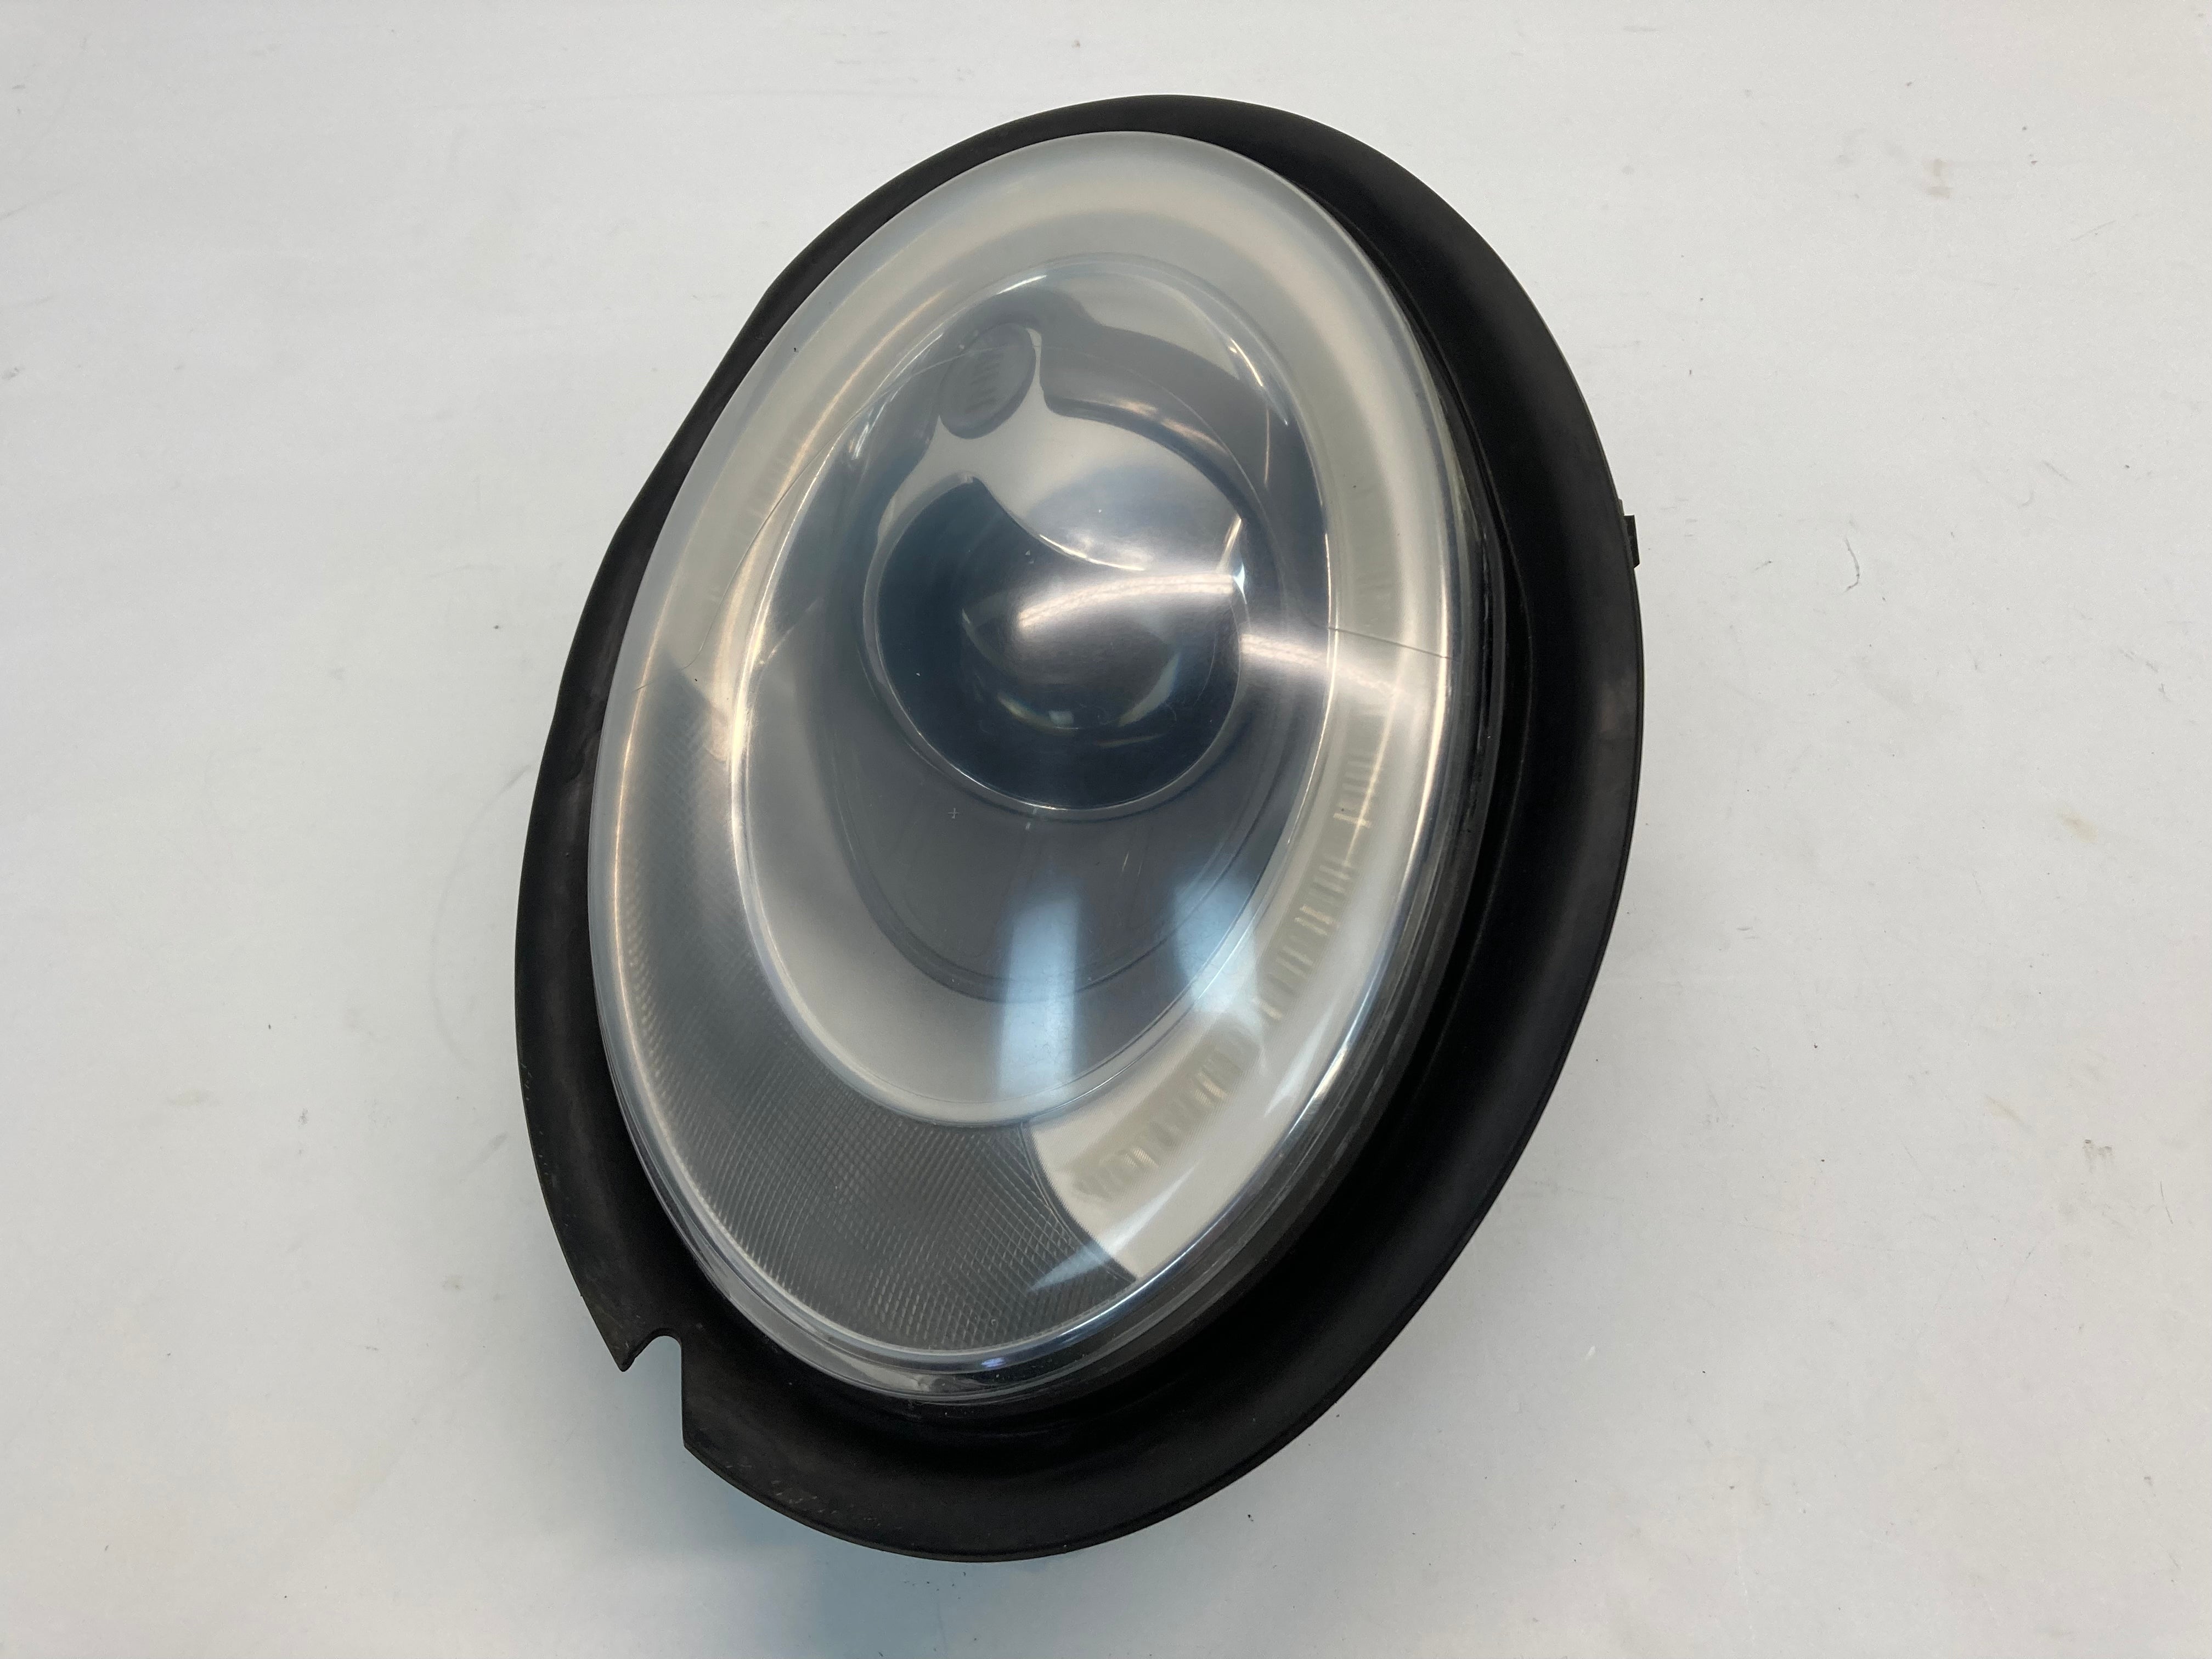 Mini Cooper Right LED Headlight White Indicator 63117383214 14-15 F55 F56 F54 390